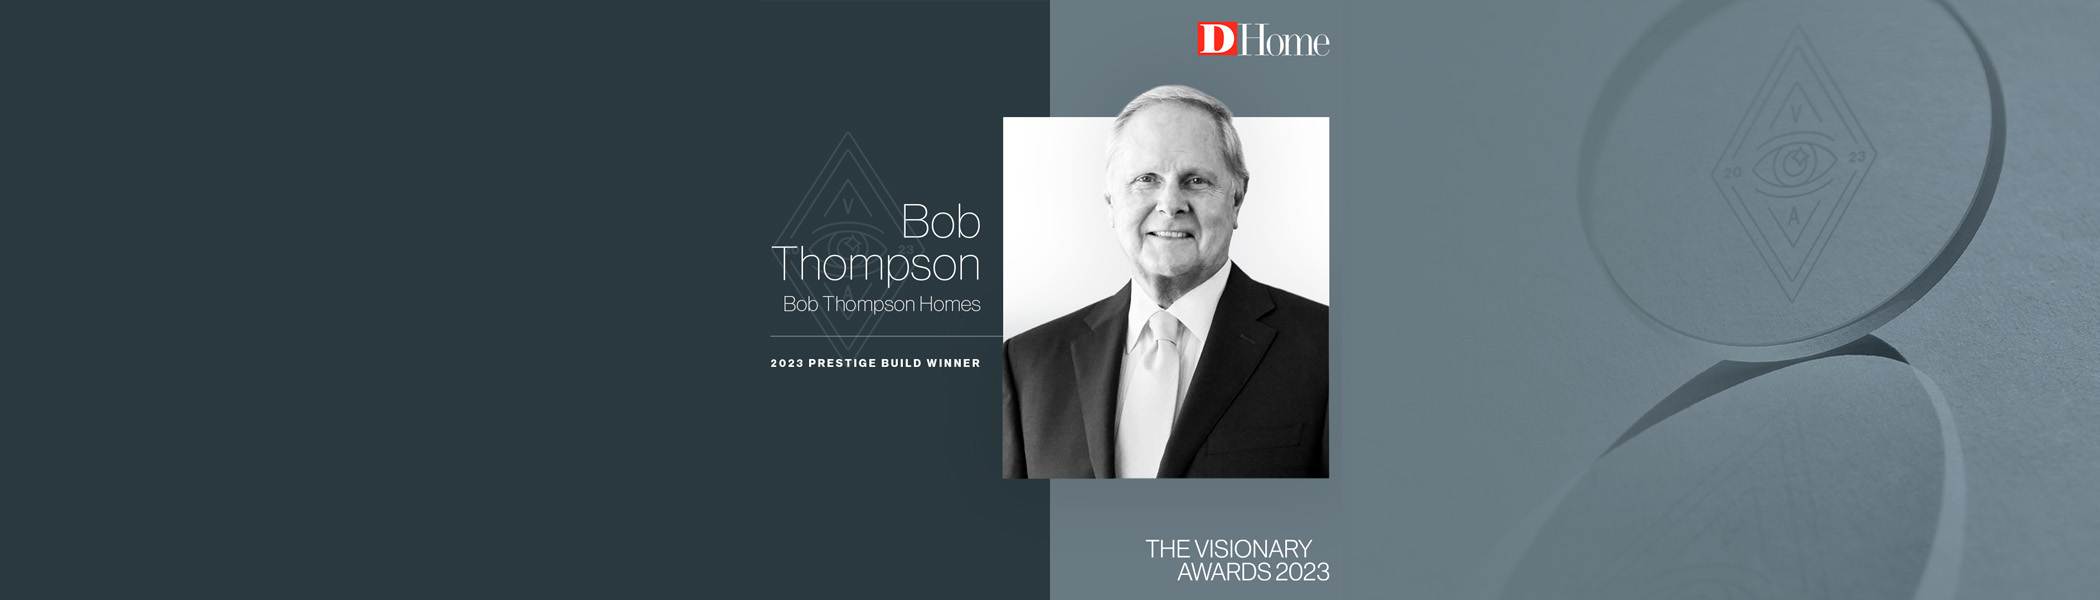 DHome The Visionary Awards 2023, Bob Thompson, Bob Thompson Homes